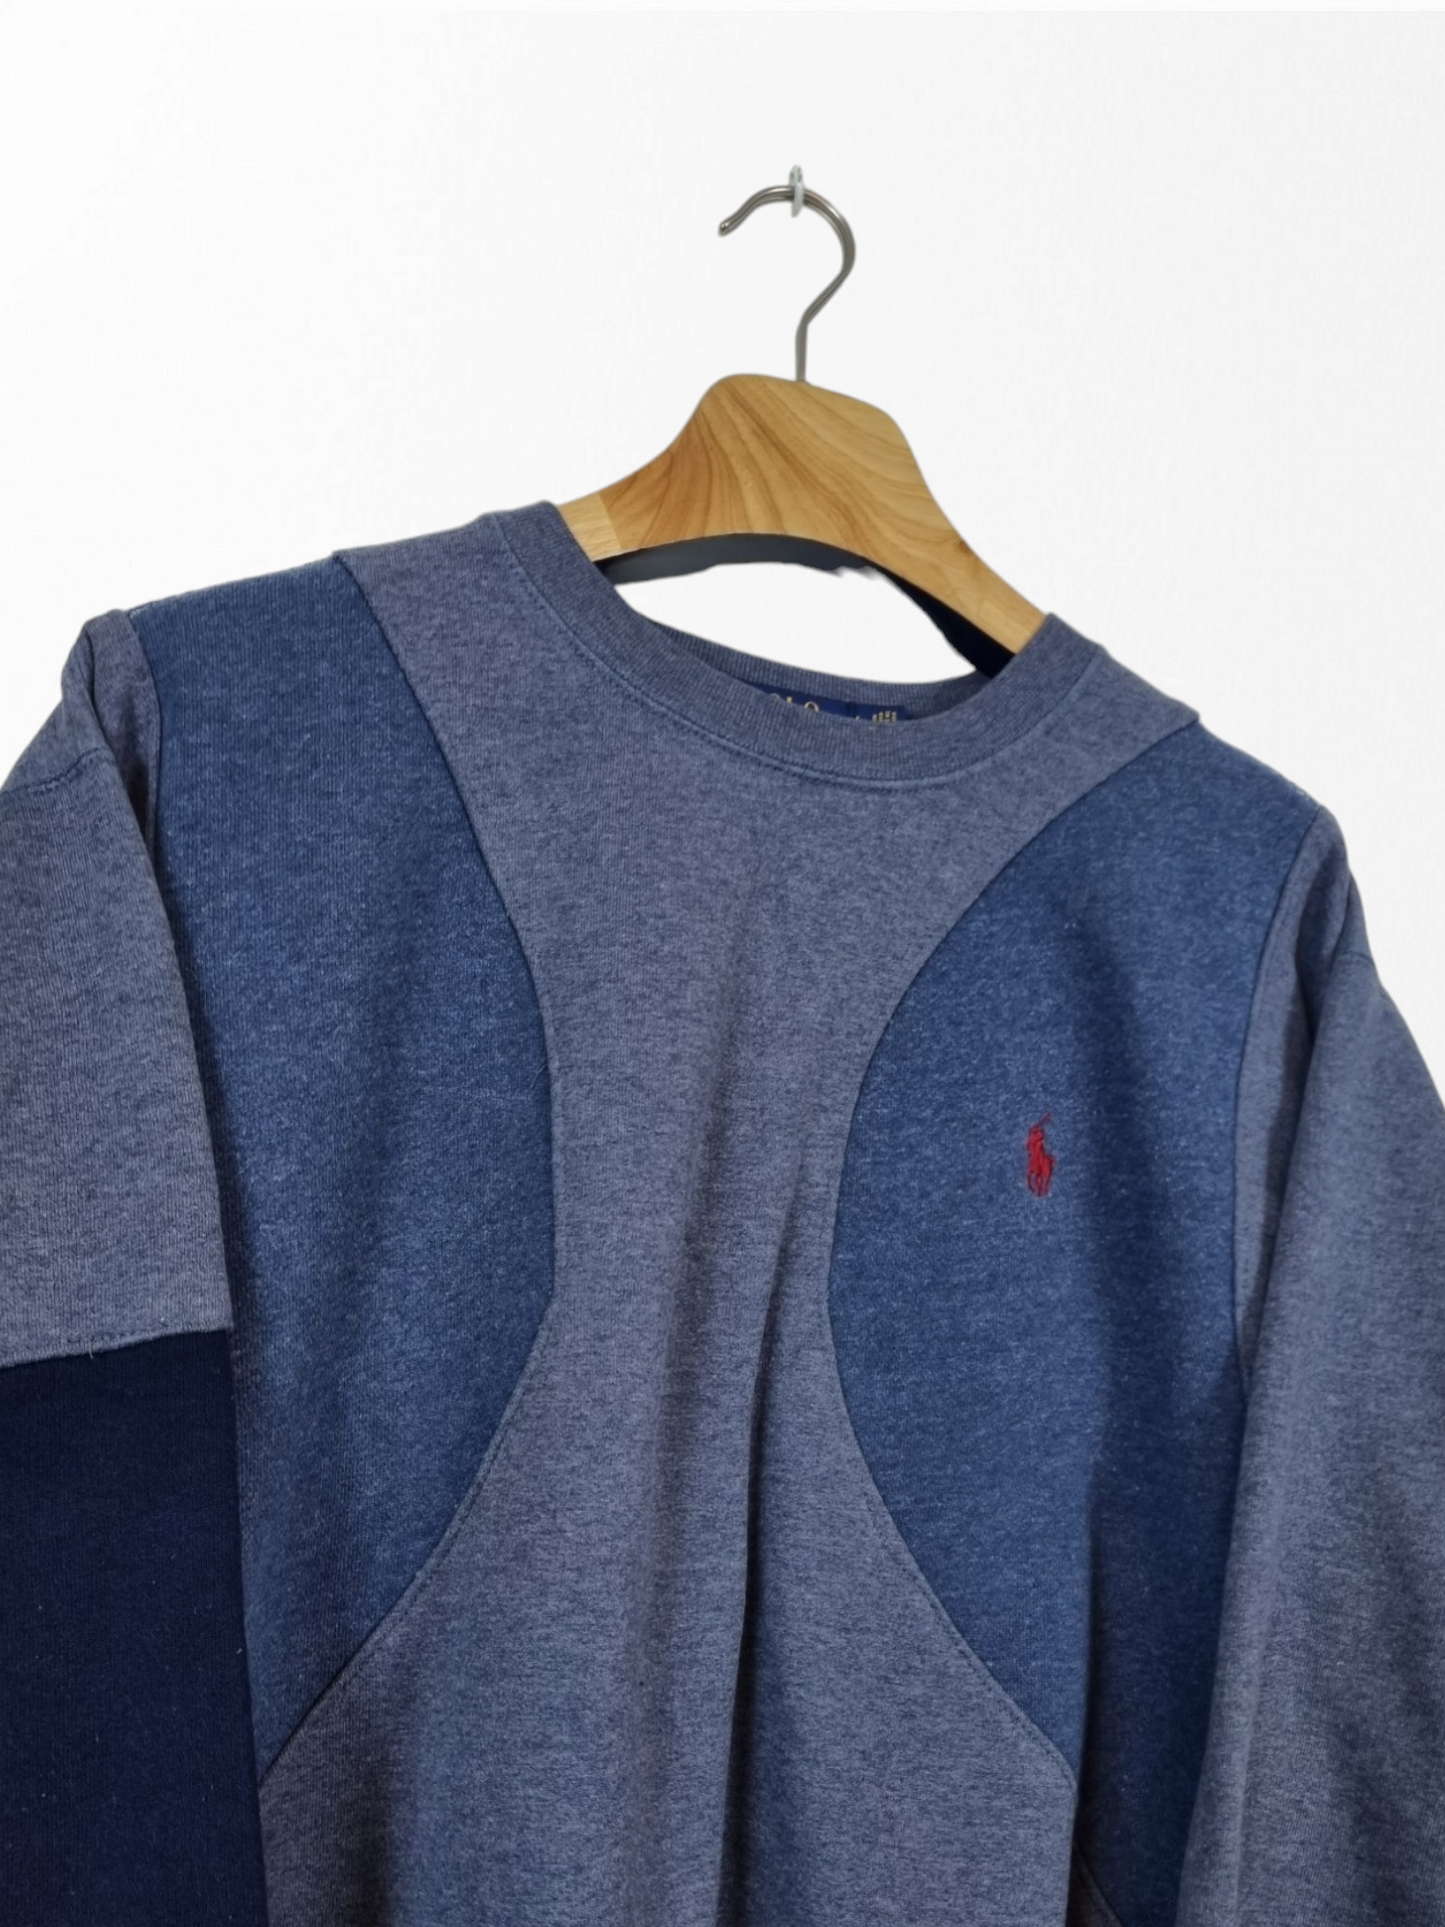 Ralph Lauren chest logo sweater maat M